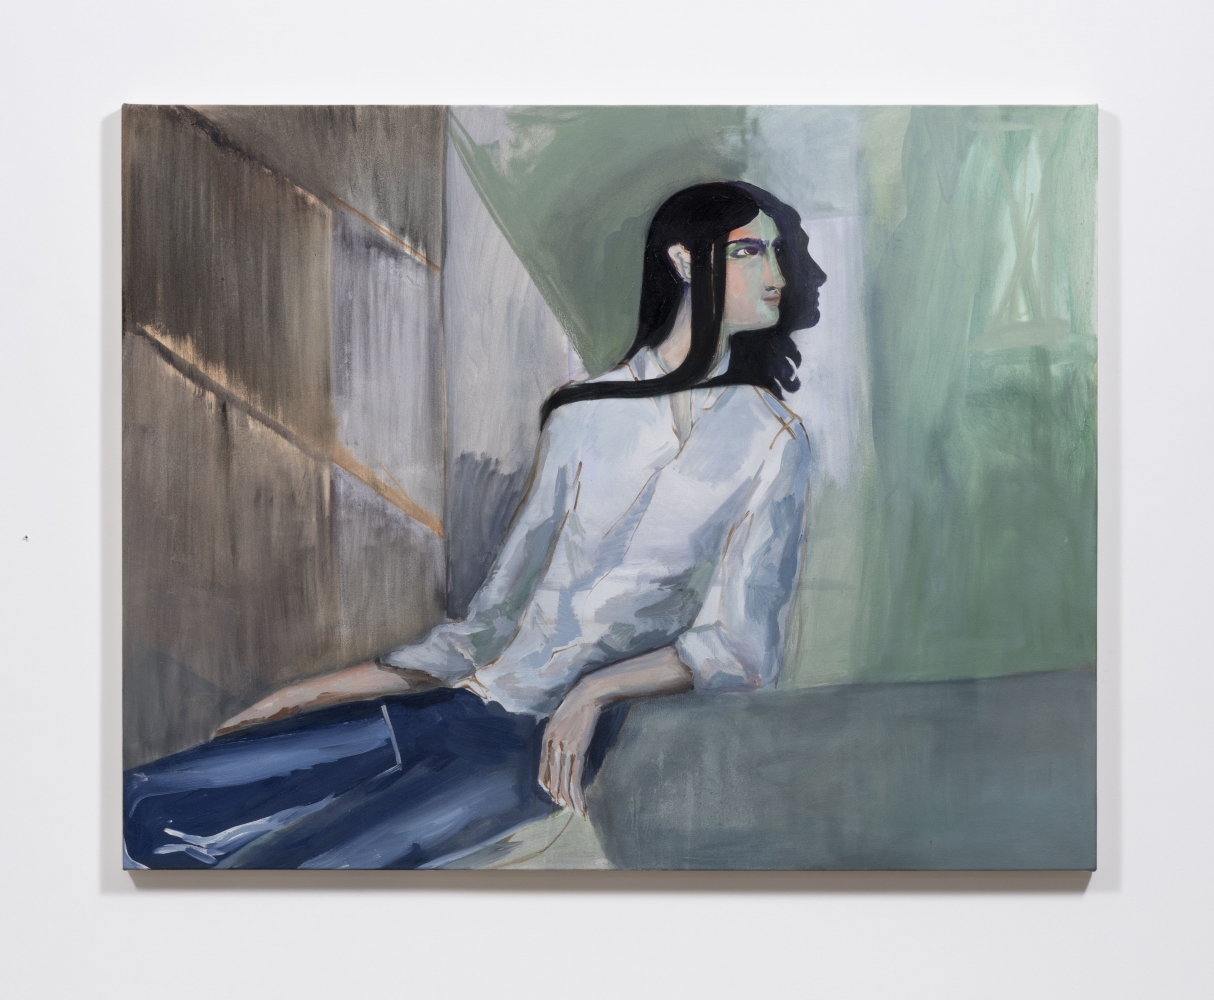 Stefania Batoeva
Untitled, 2021
oil on canvas
43.3 x 55 in
110 x 140 cm